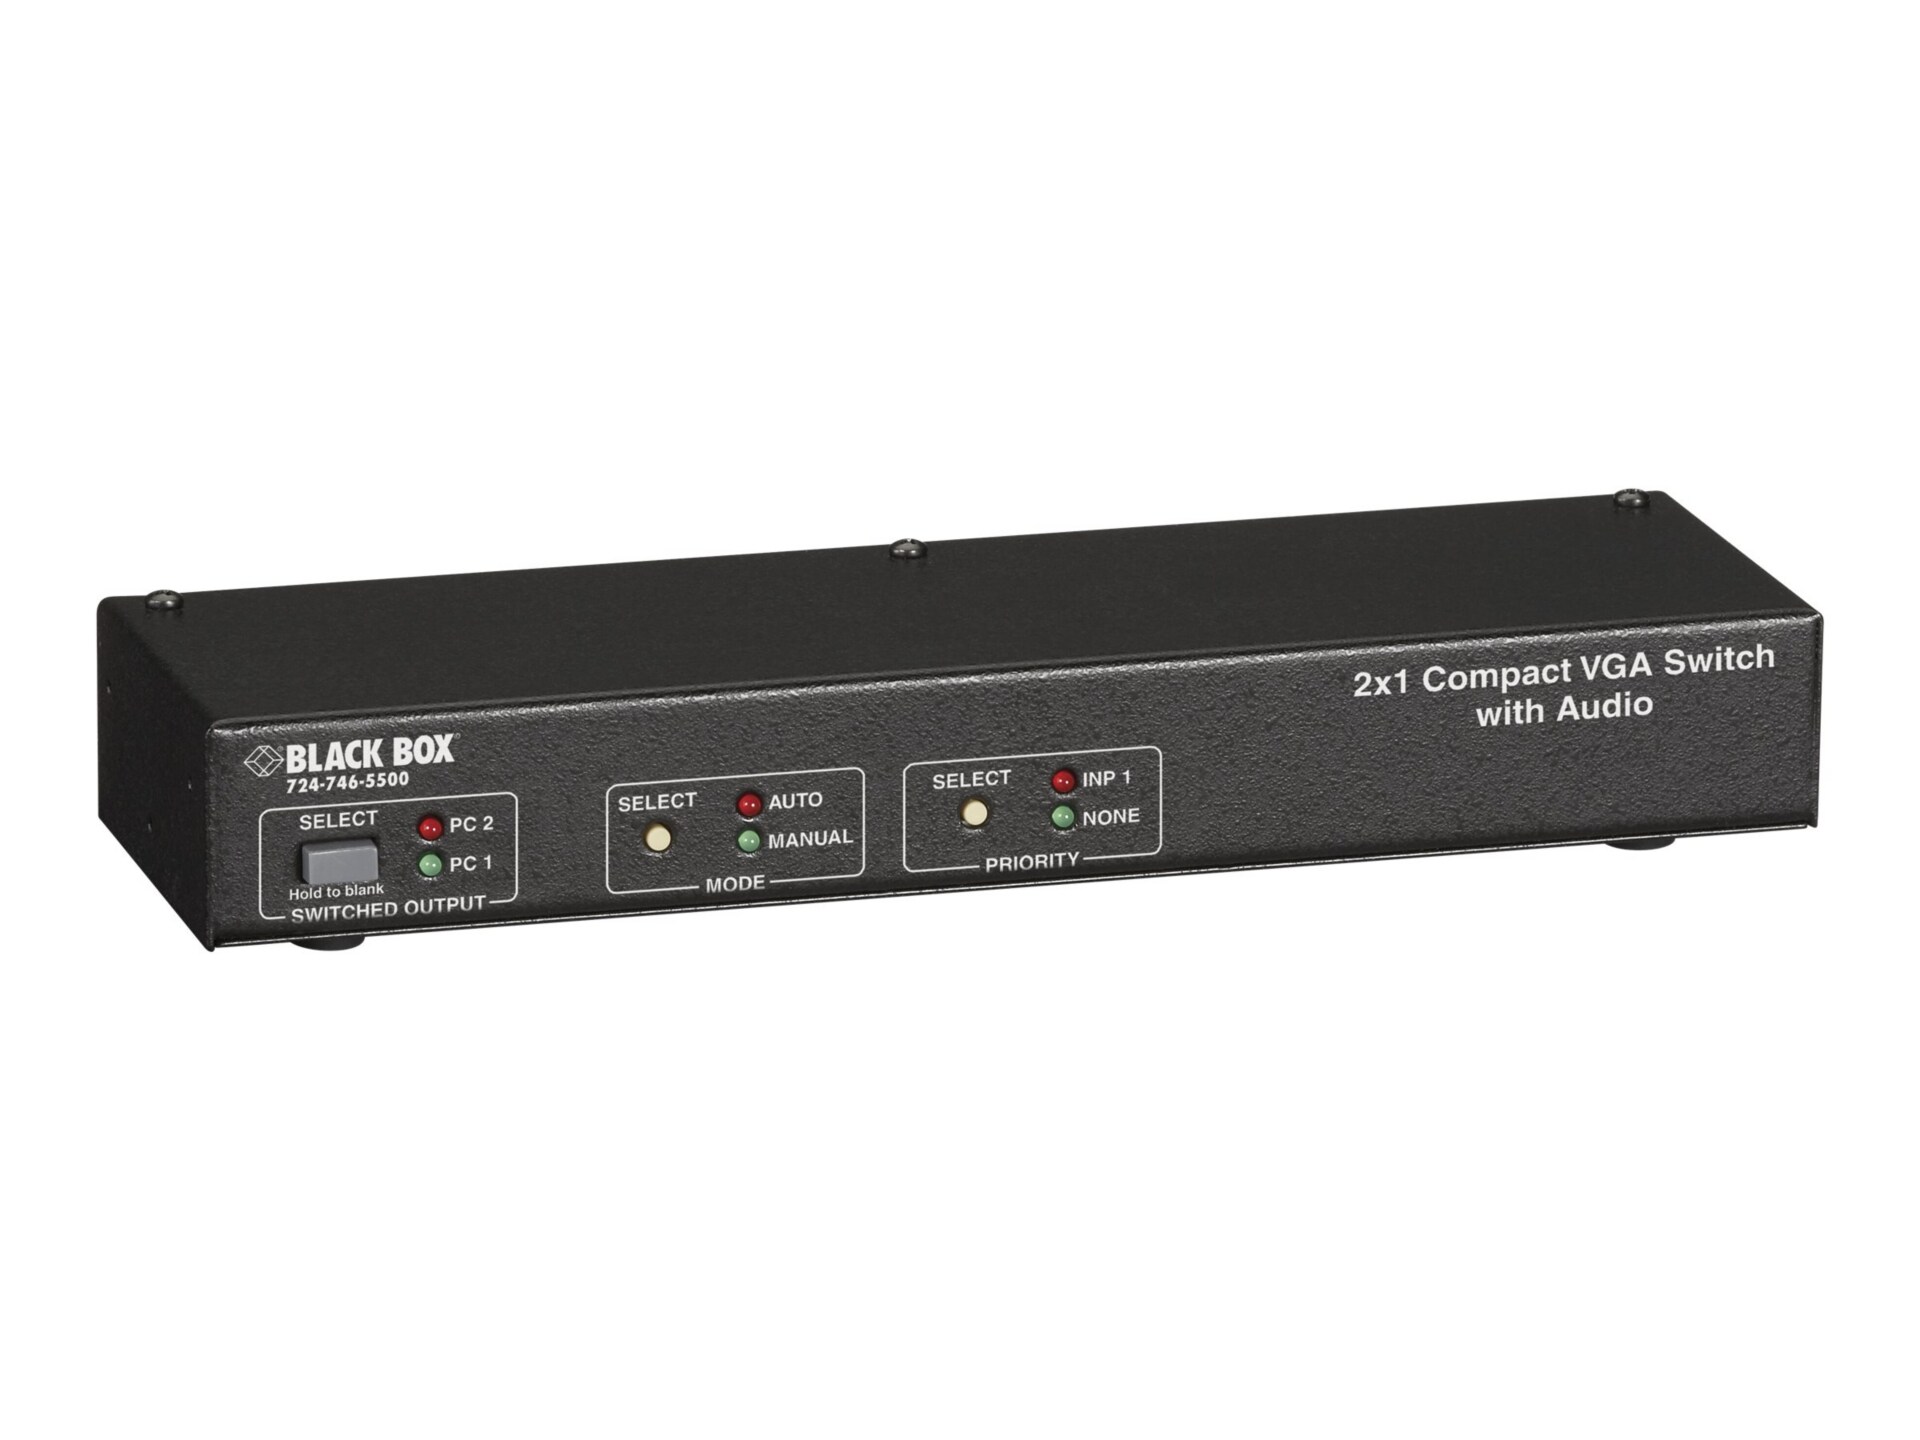 Black Box Compact VGA Switch 2 x 1 with Audio - monitor/audio switch - 2 ports